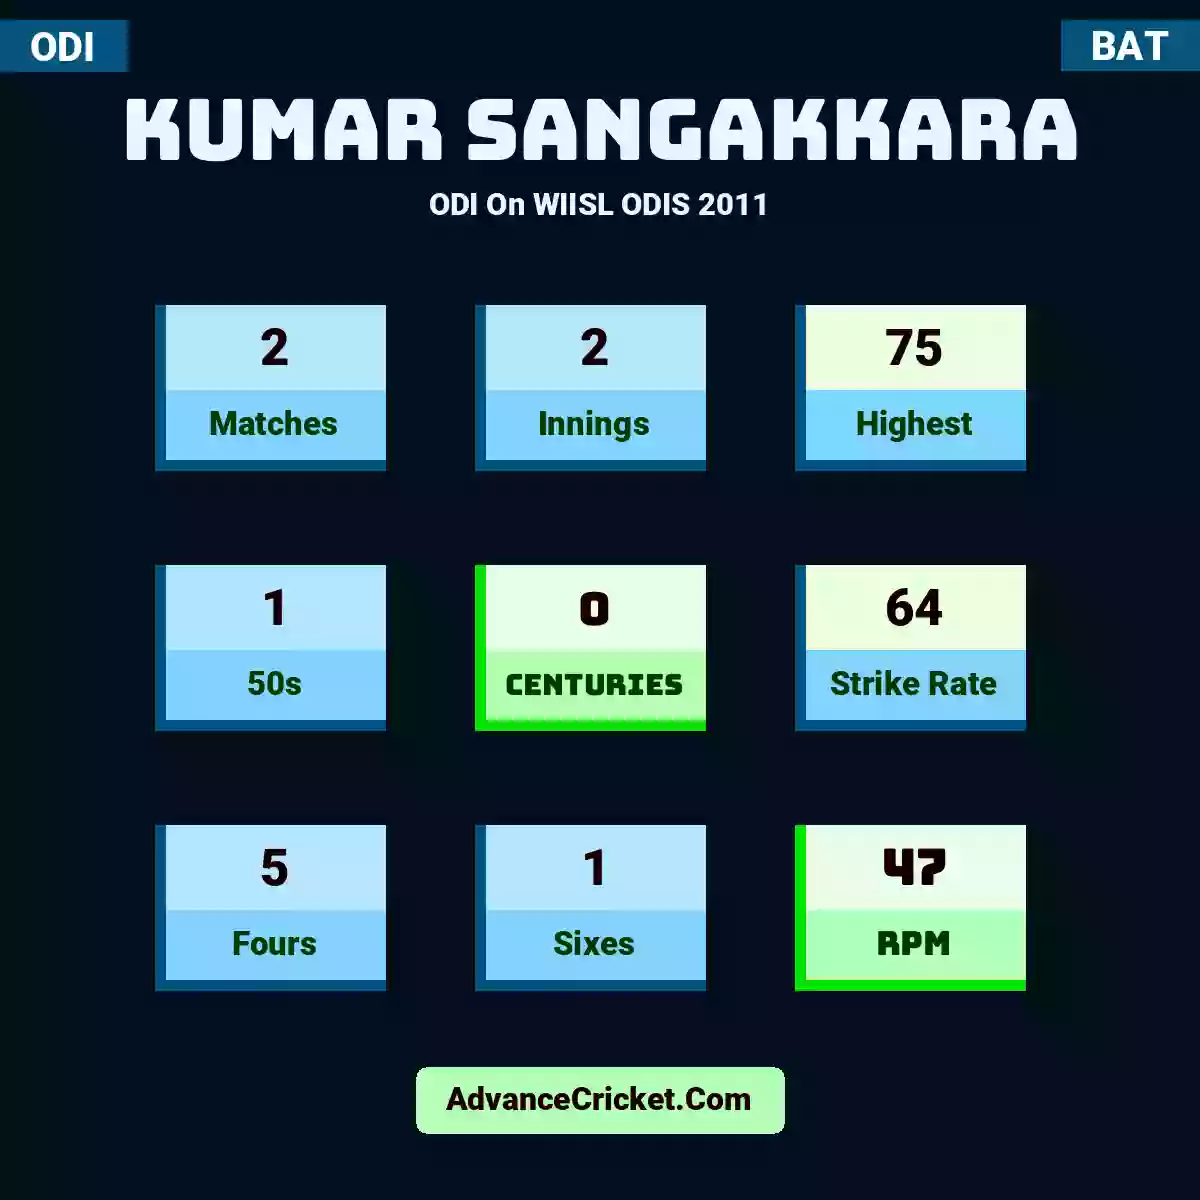 Kumar Sangakkara ODI  On WIISL ODIS 2011, Kumar Sangakkara played 2 matches, scored 75 runs as highest, 1 half-centuries, and 0 centuries, with a strike rate of 64. K.Sangakkara hit 5 fours and 1 sixes, with an RPM of 47.